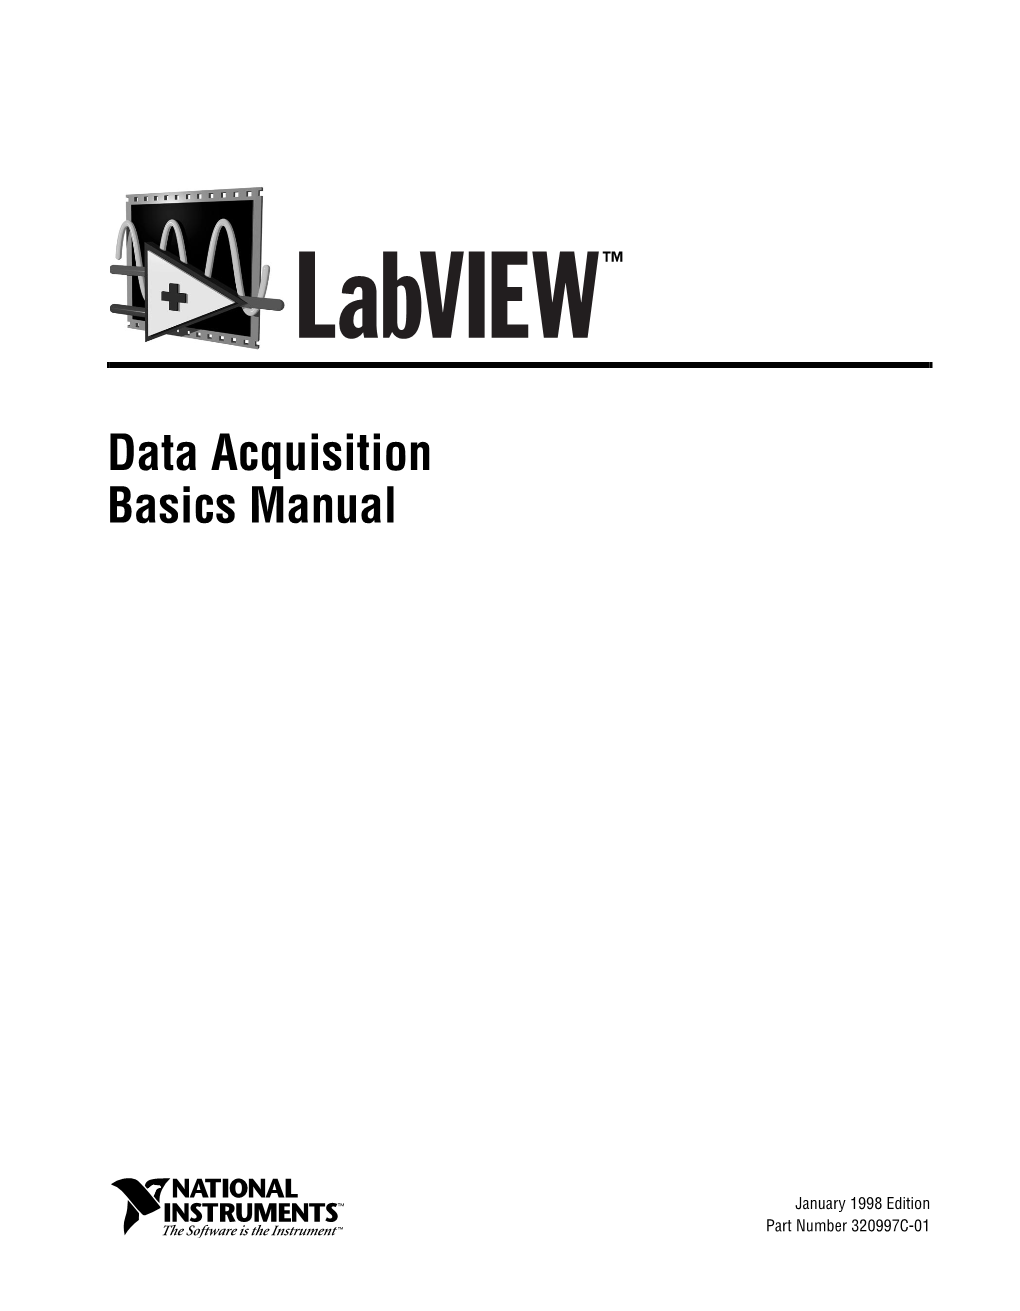 Labview Data Acquisition Basics Manual